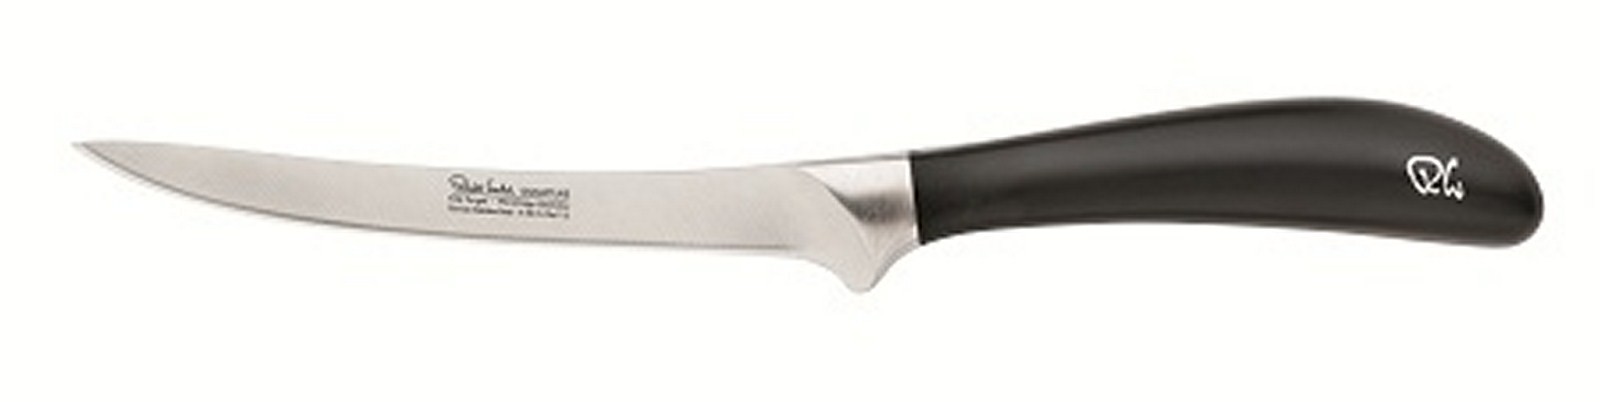 Robert Welch Signature Boning Knife